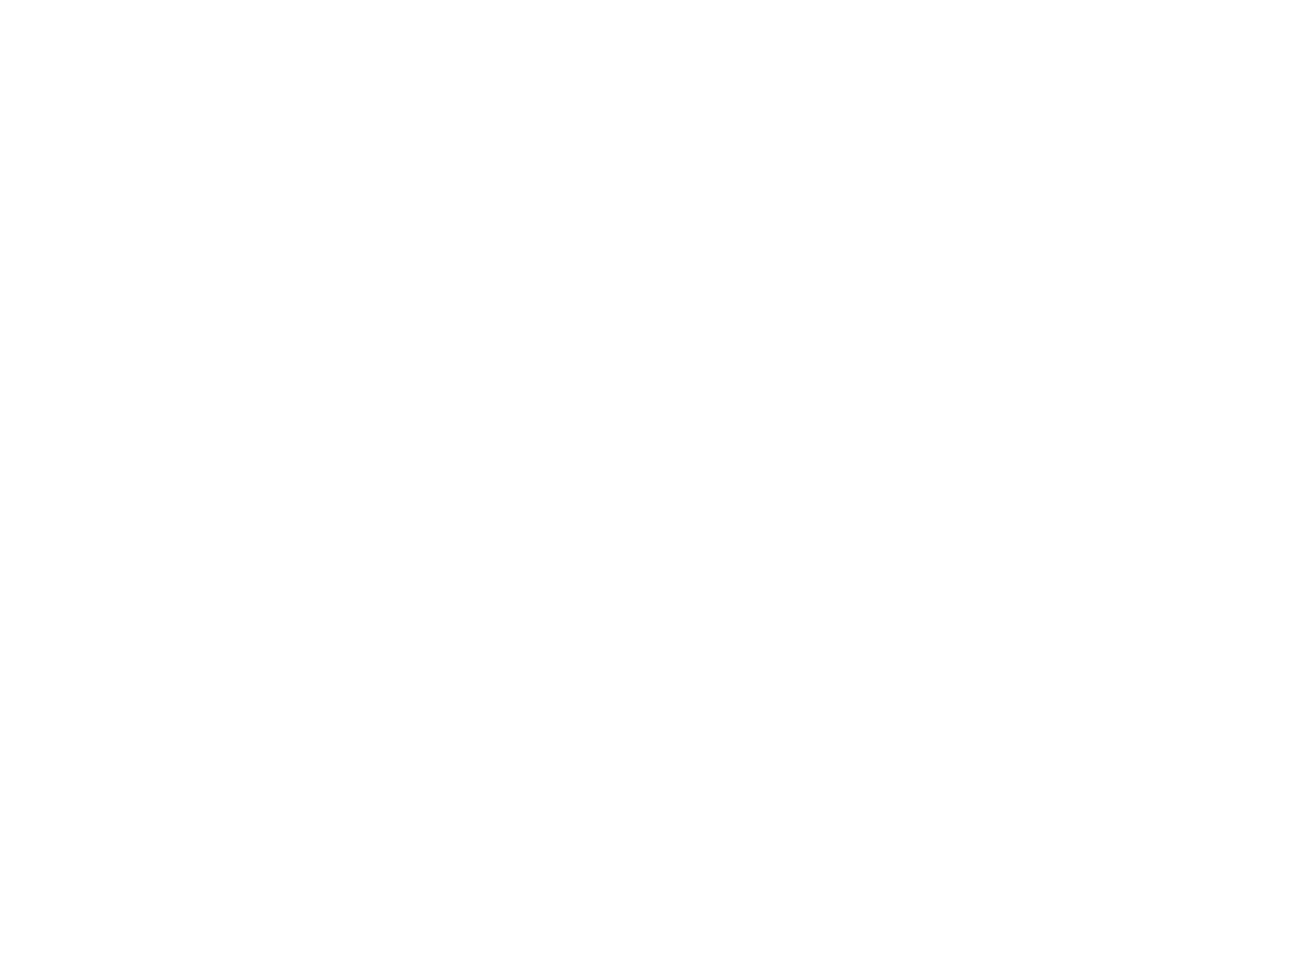 A White vector logo of Hotel El Convento building and name